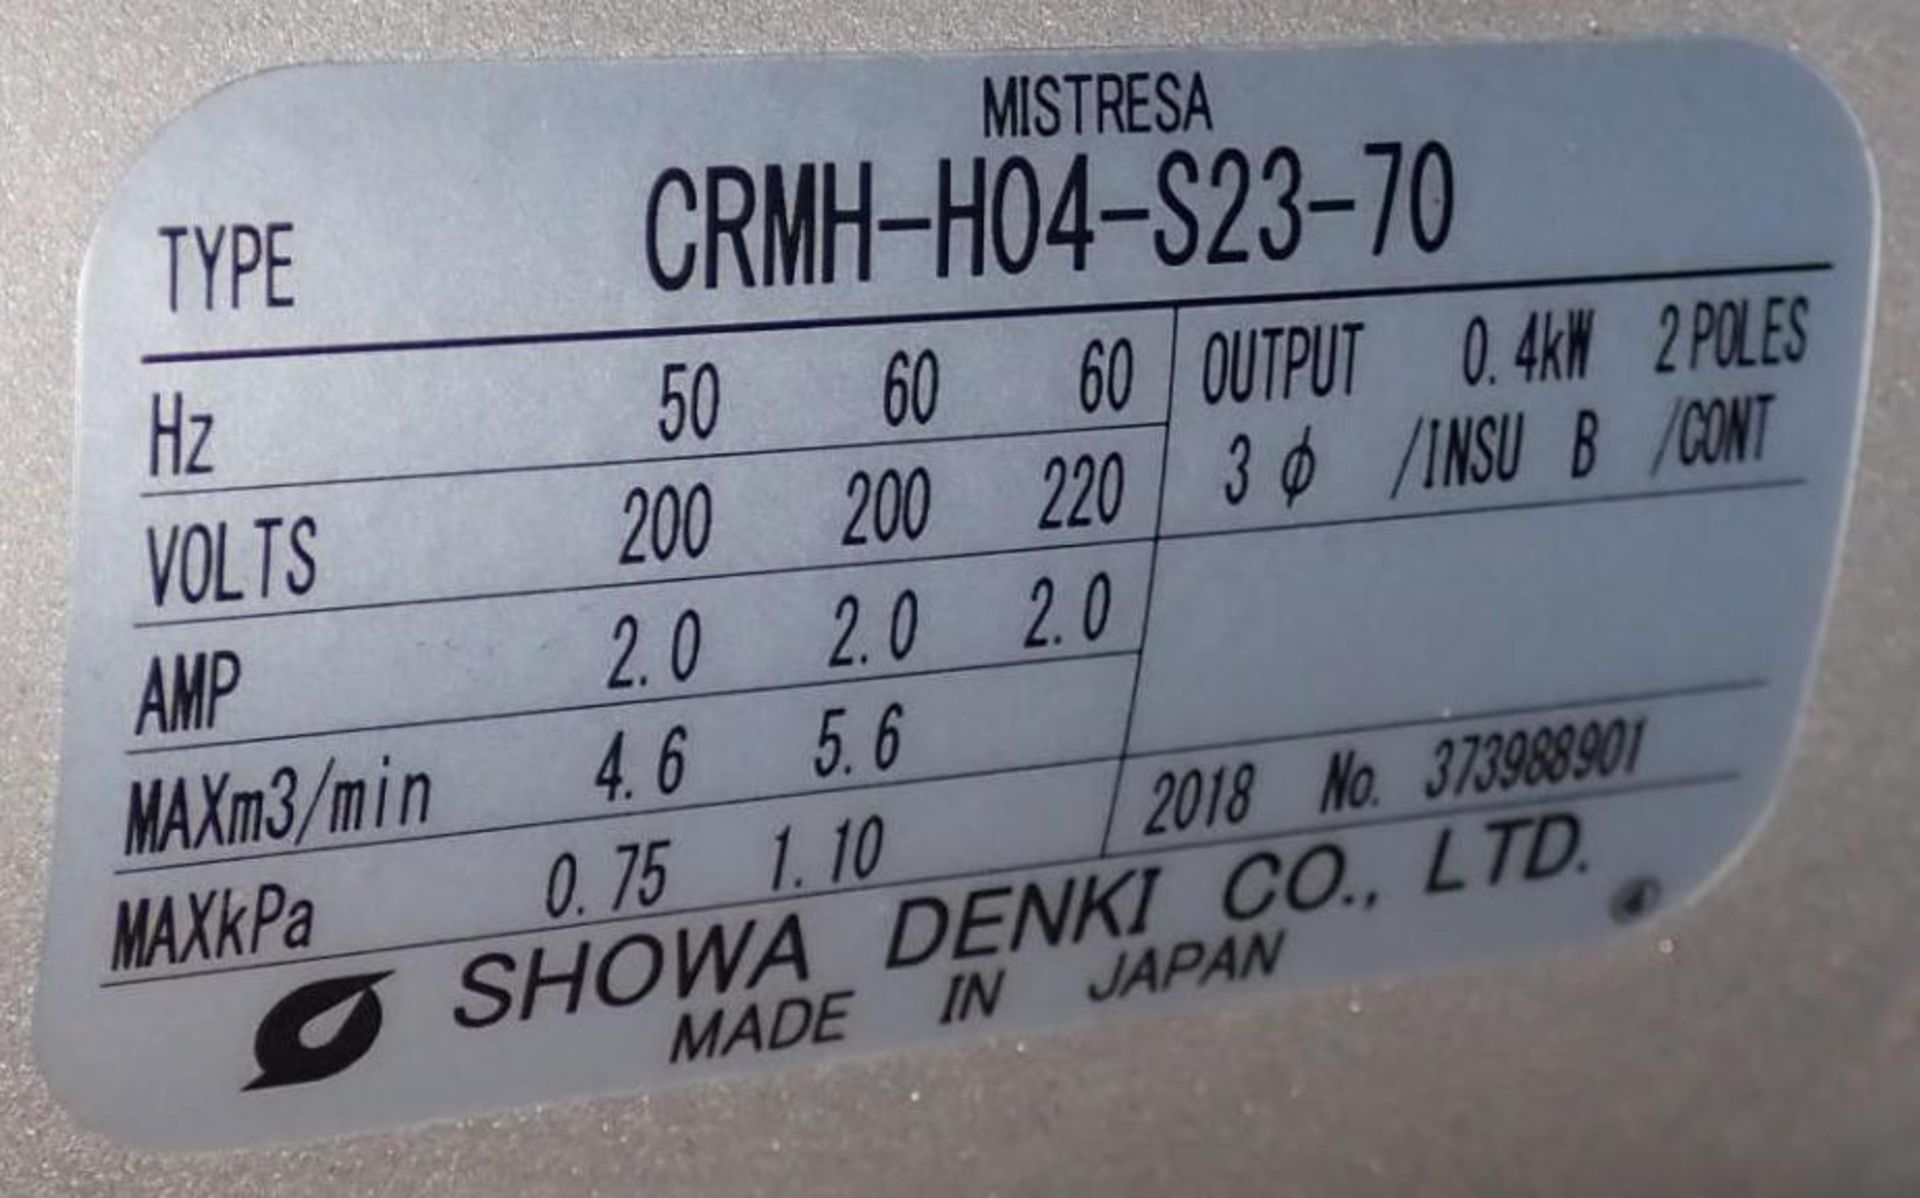 Lot of (2) Showa Denki / Mistresa #CRMH-H04-S23-70 Oil Mist Collectors - Image 3 of 5